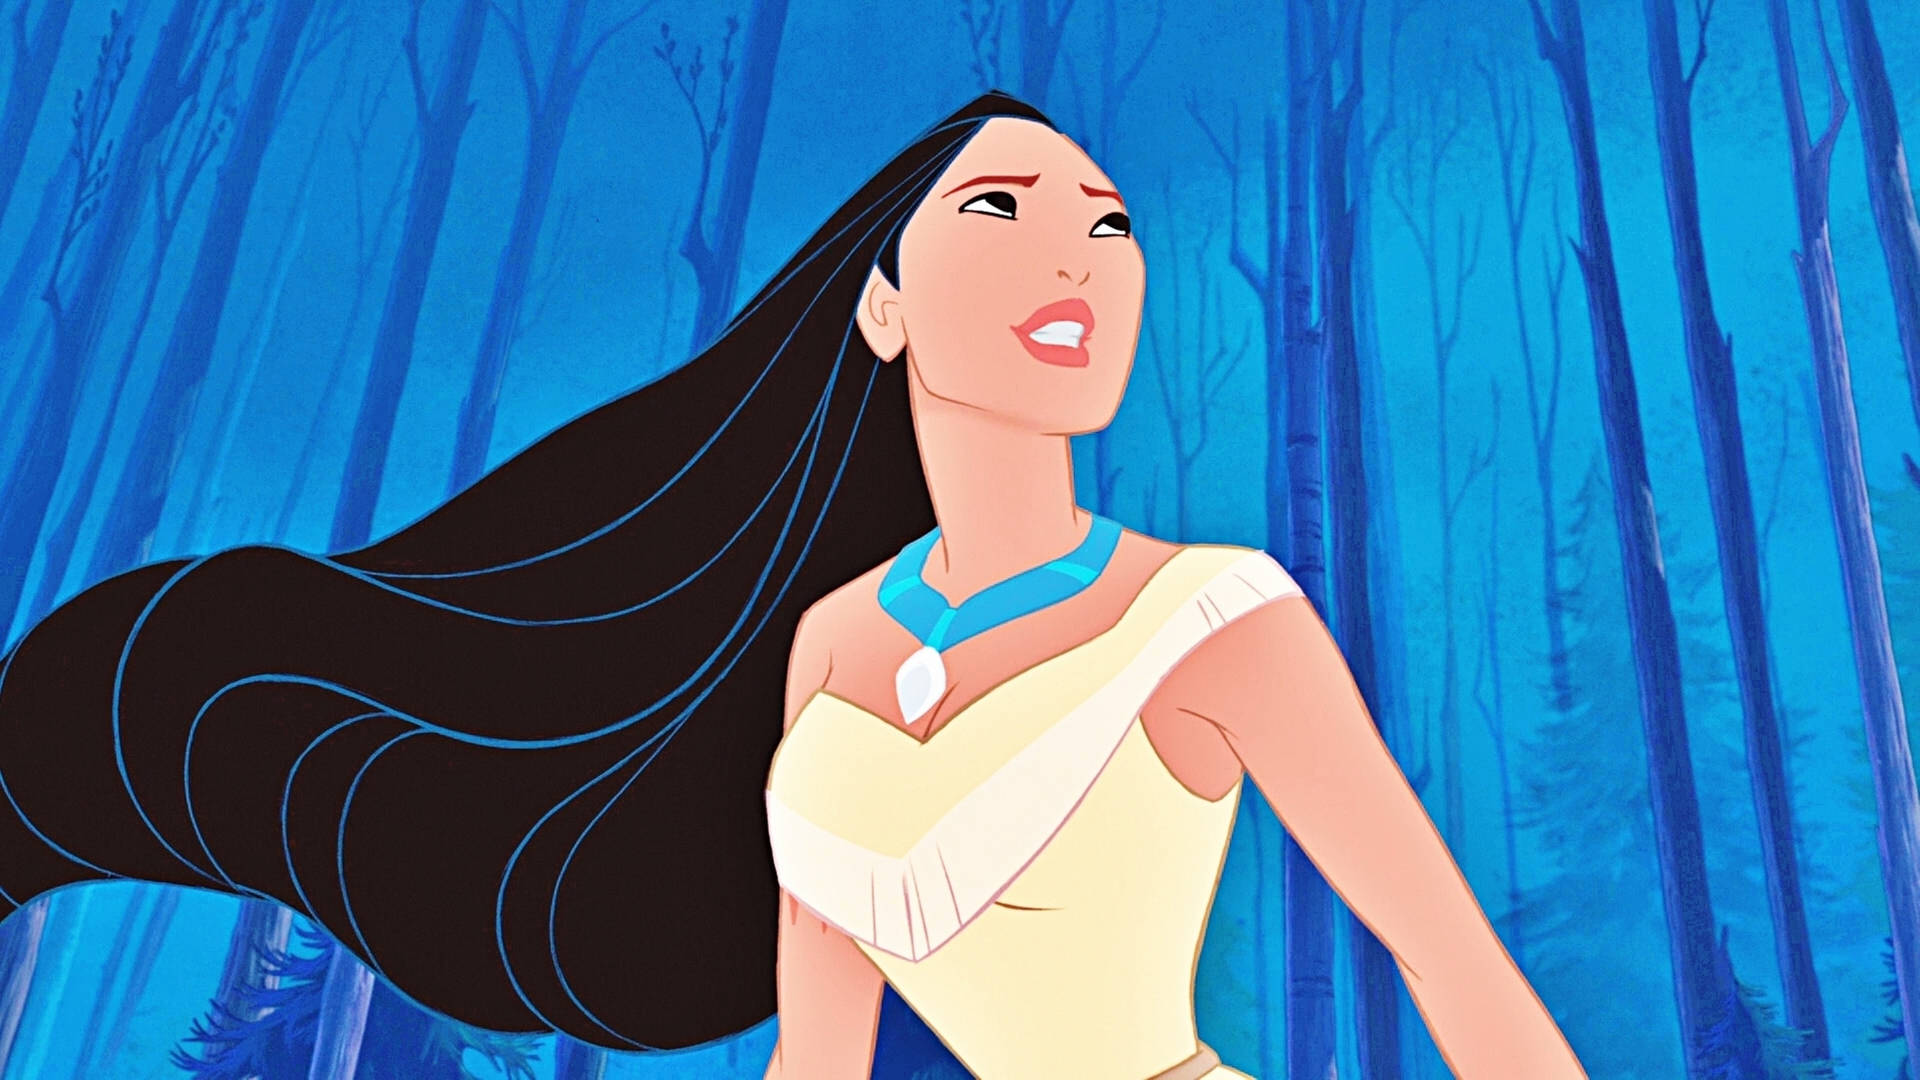 Disney Princess Pocahontas Wallpaper